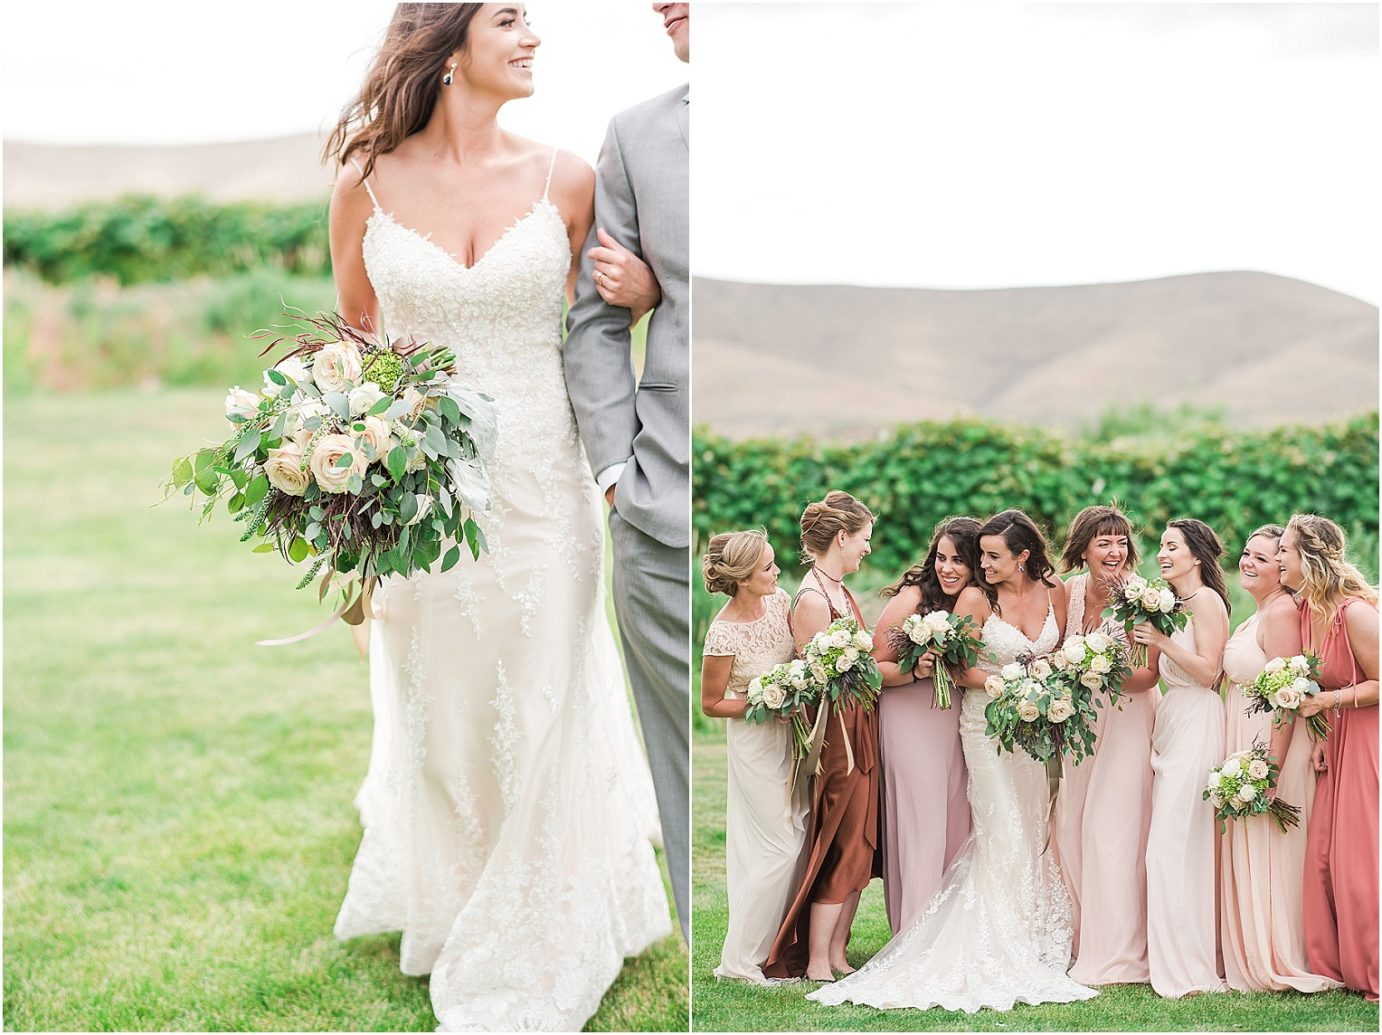 Favorite wedding florals of 2018 for brides flowing blush and beige wedding bouquet